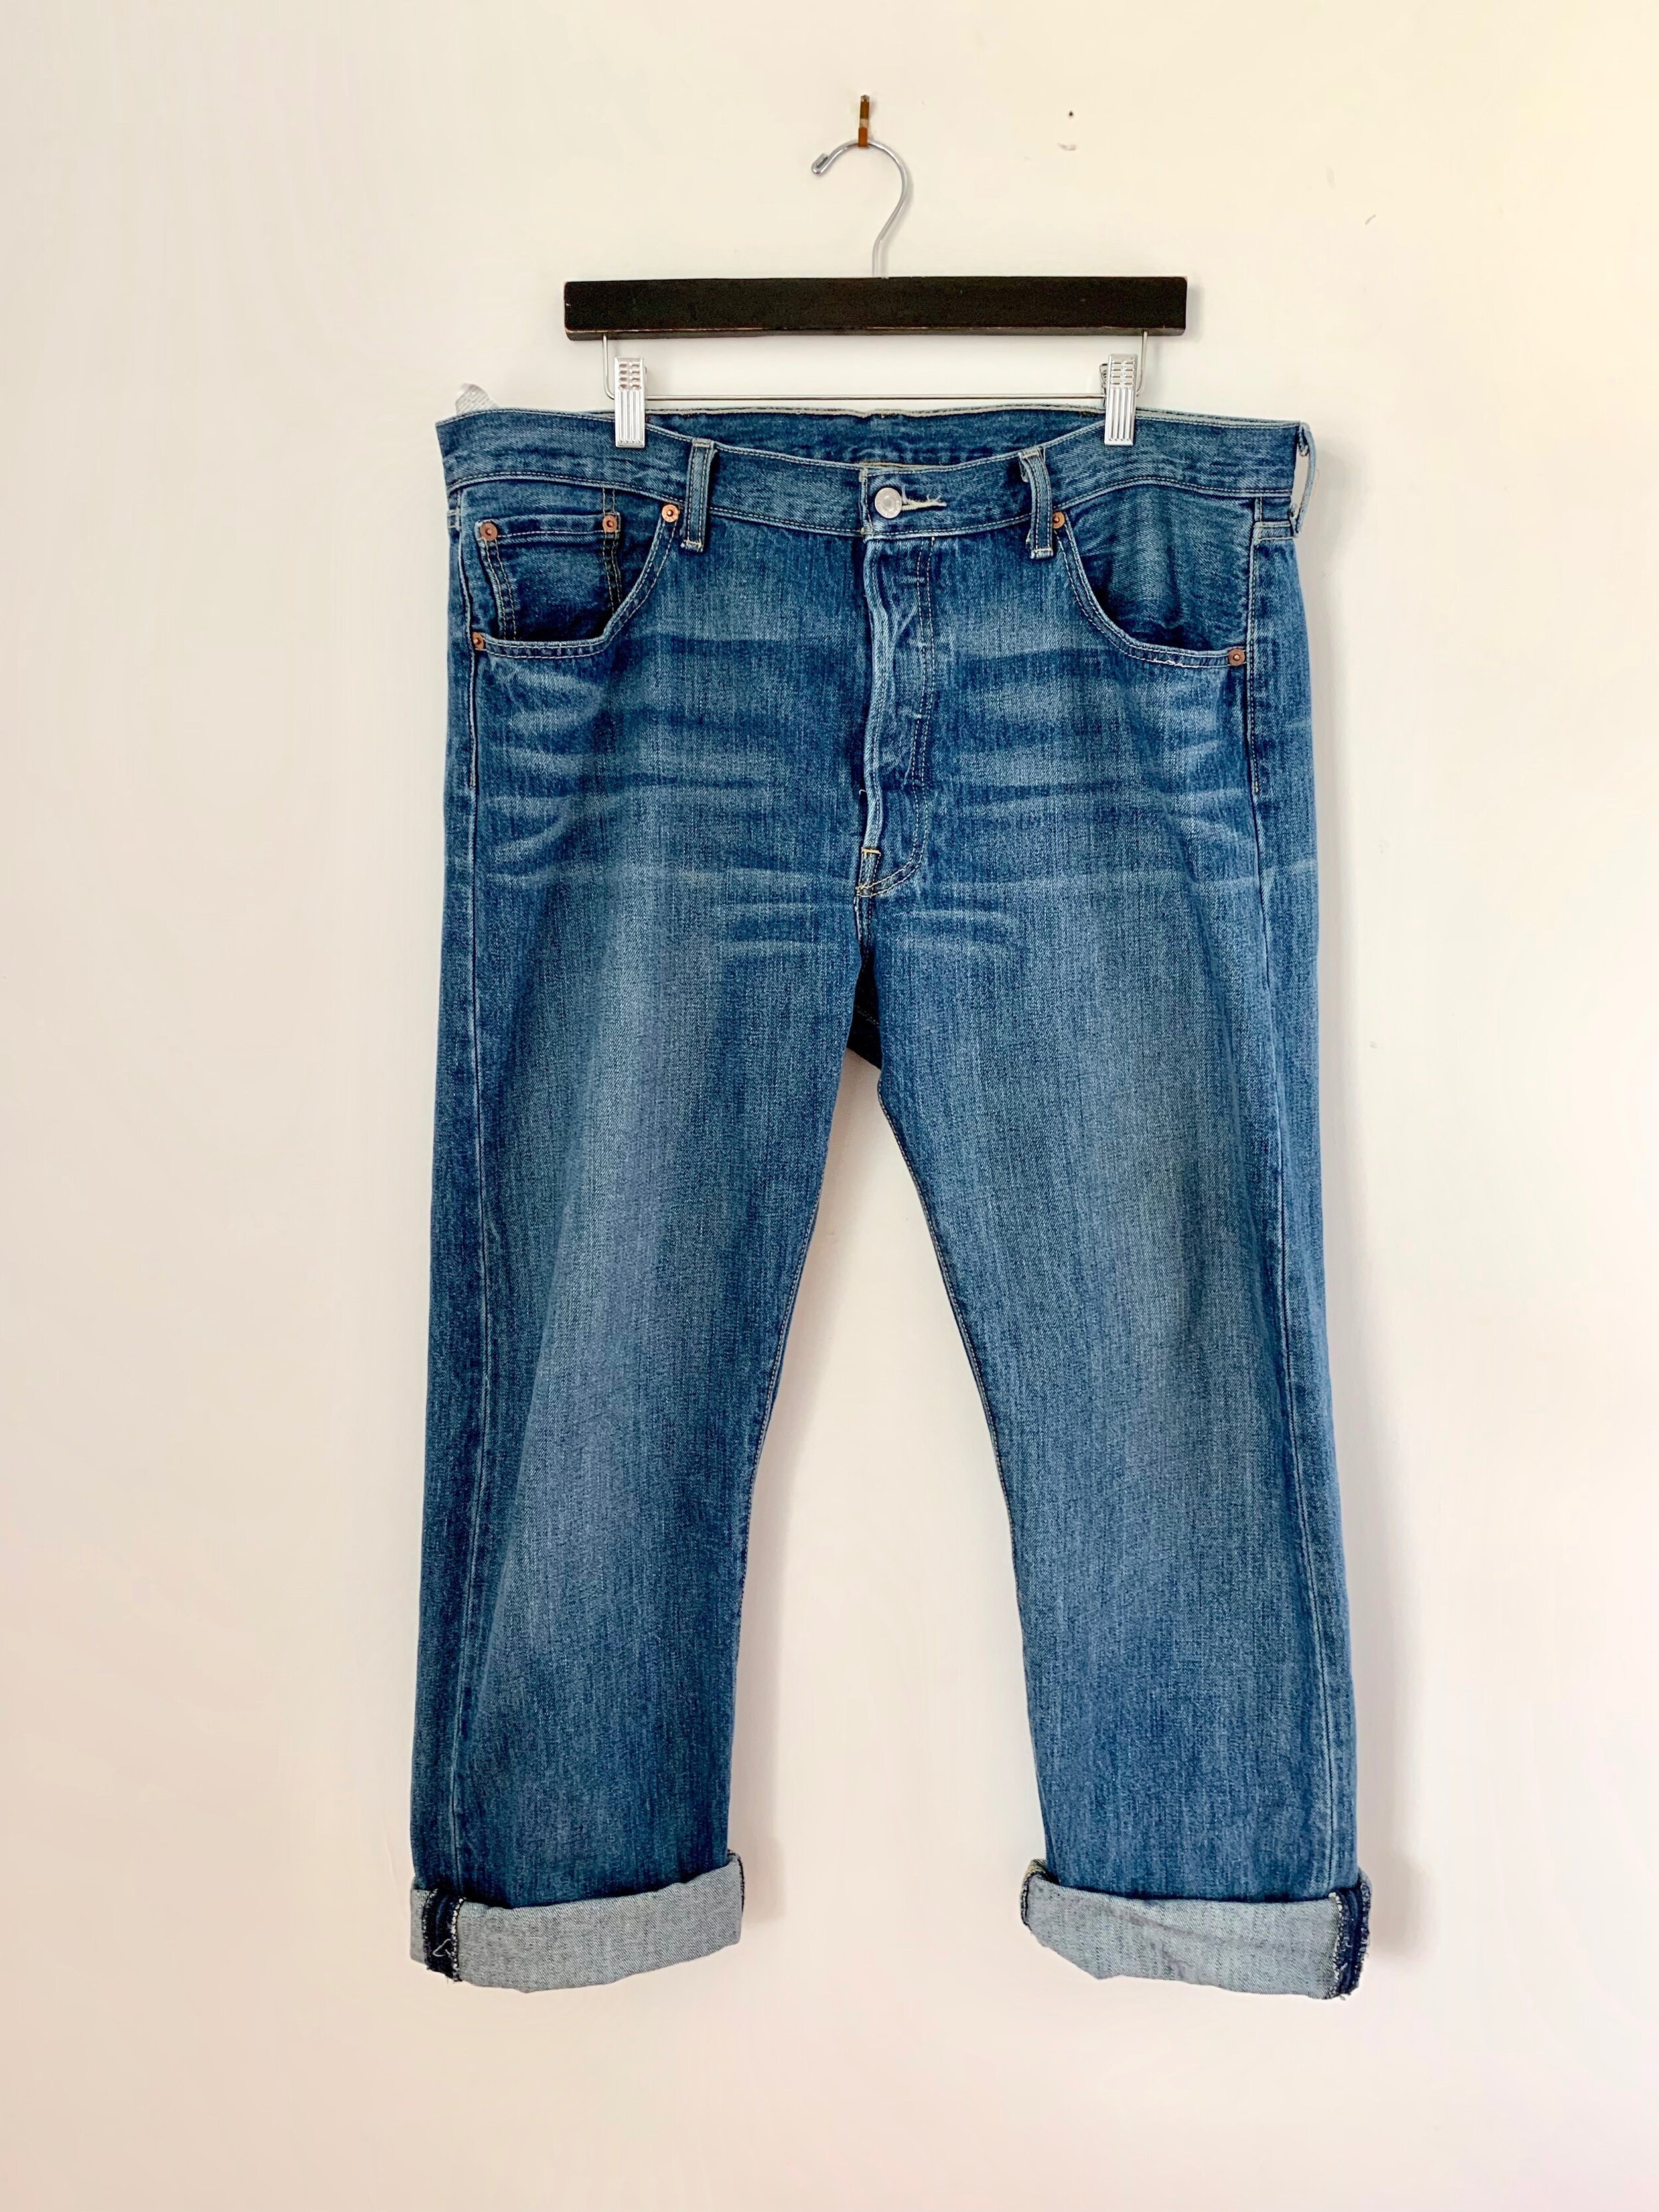 Levi's 501 Jeans.jpeg